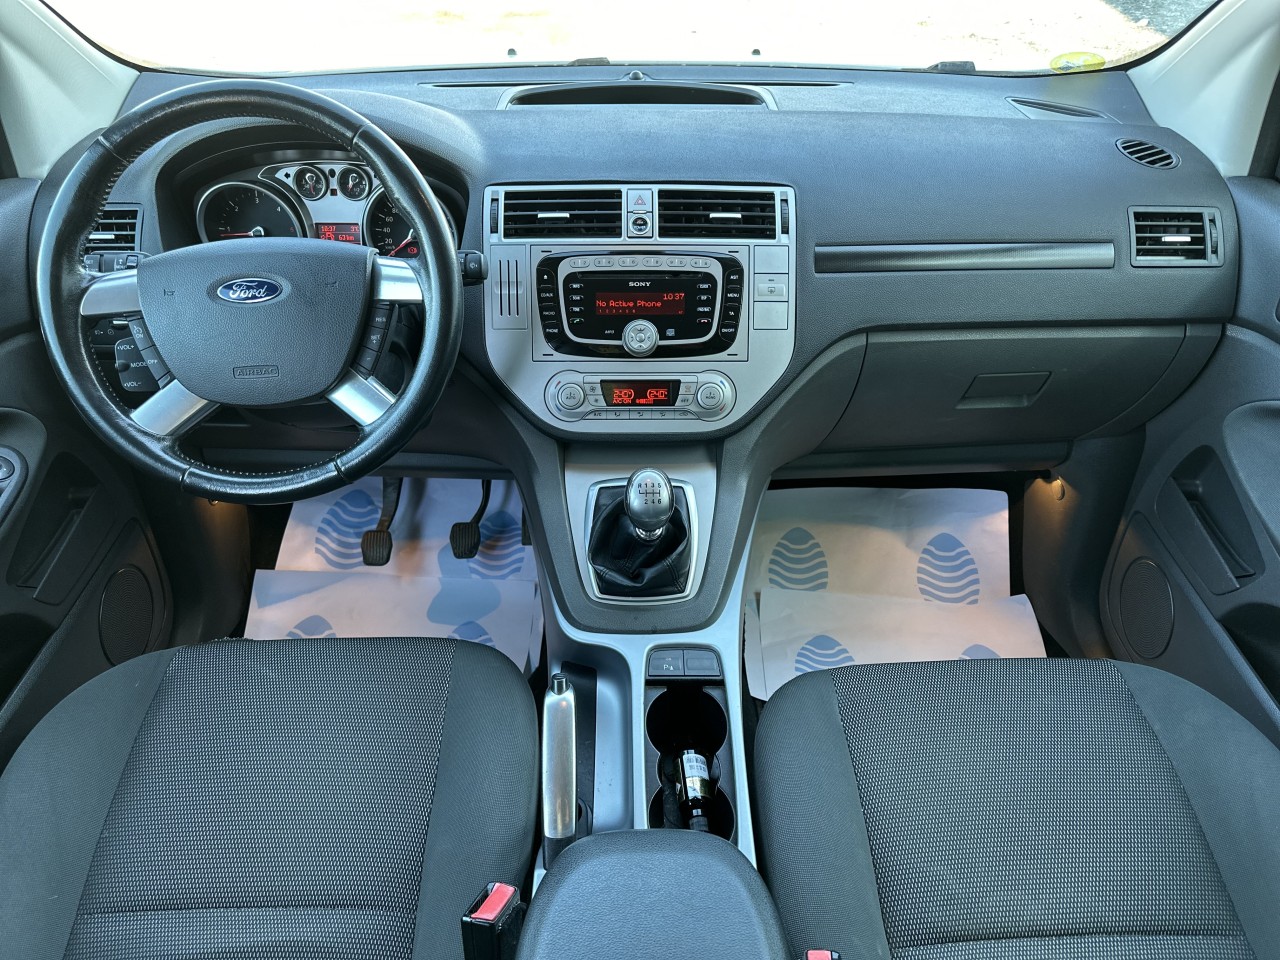 Ford Kuga 2.0 TDCi 4x4 ,140 CP , PDC, Clima , euro 5 2012